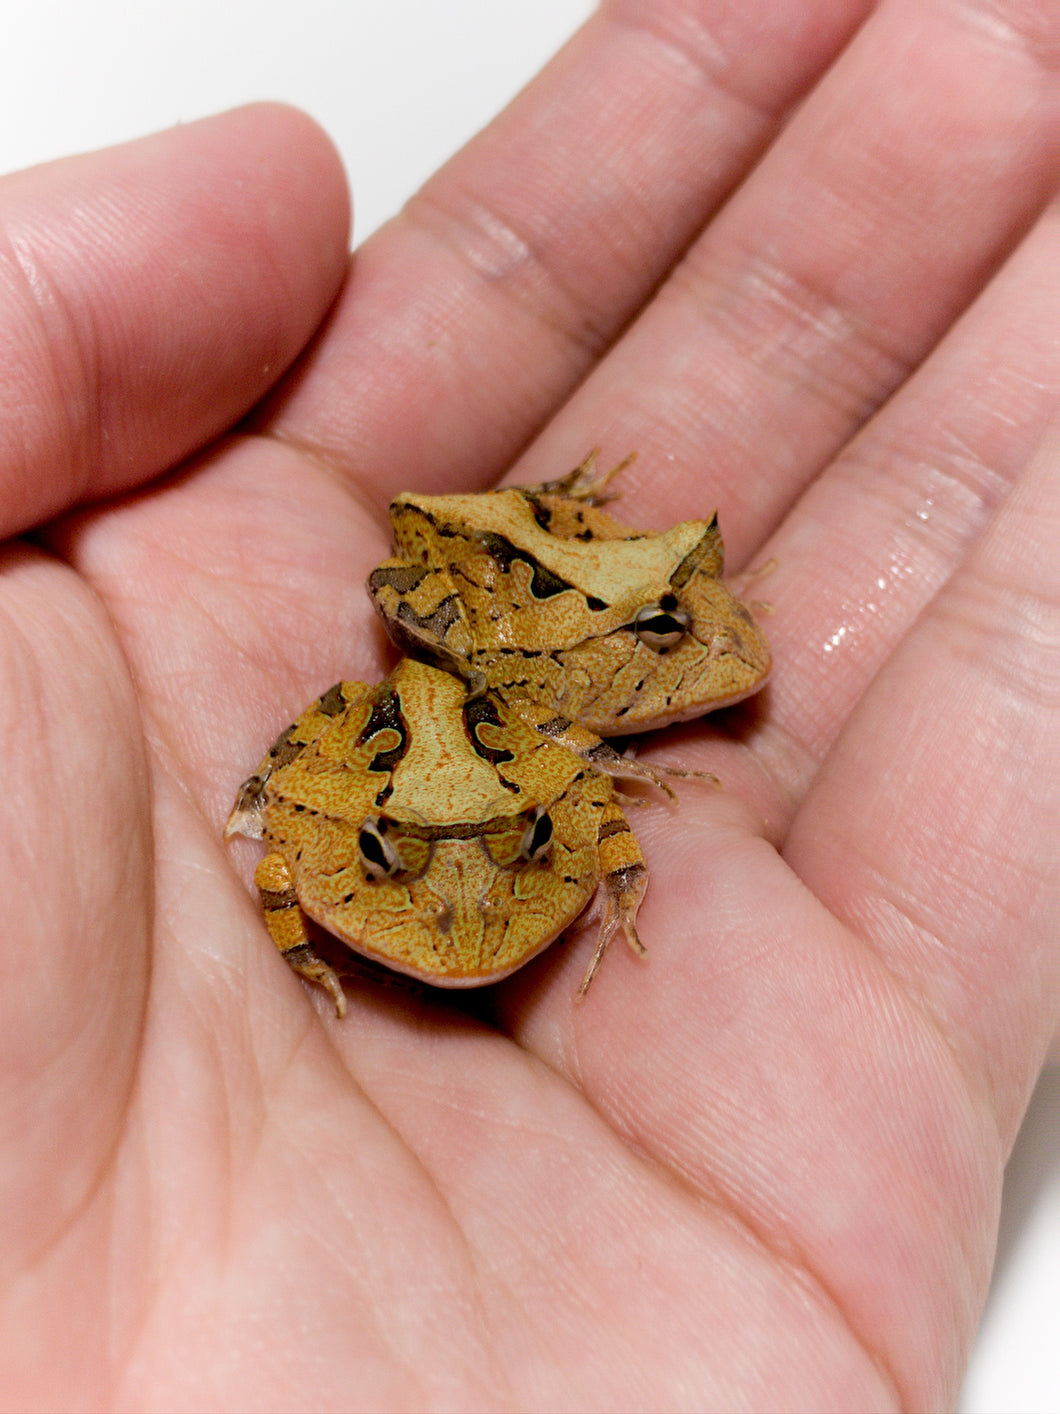 A98 Brown Surinam Horned Pacman Frog - Ceratophrys cornuta